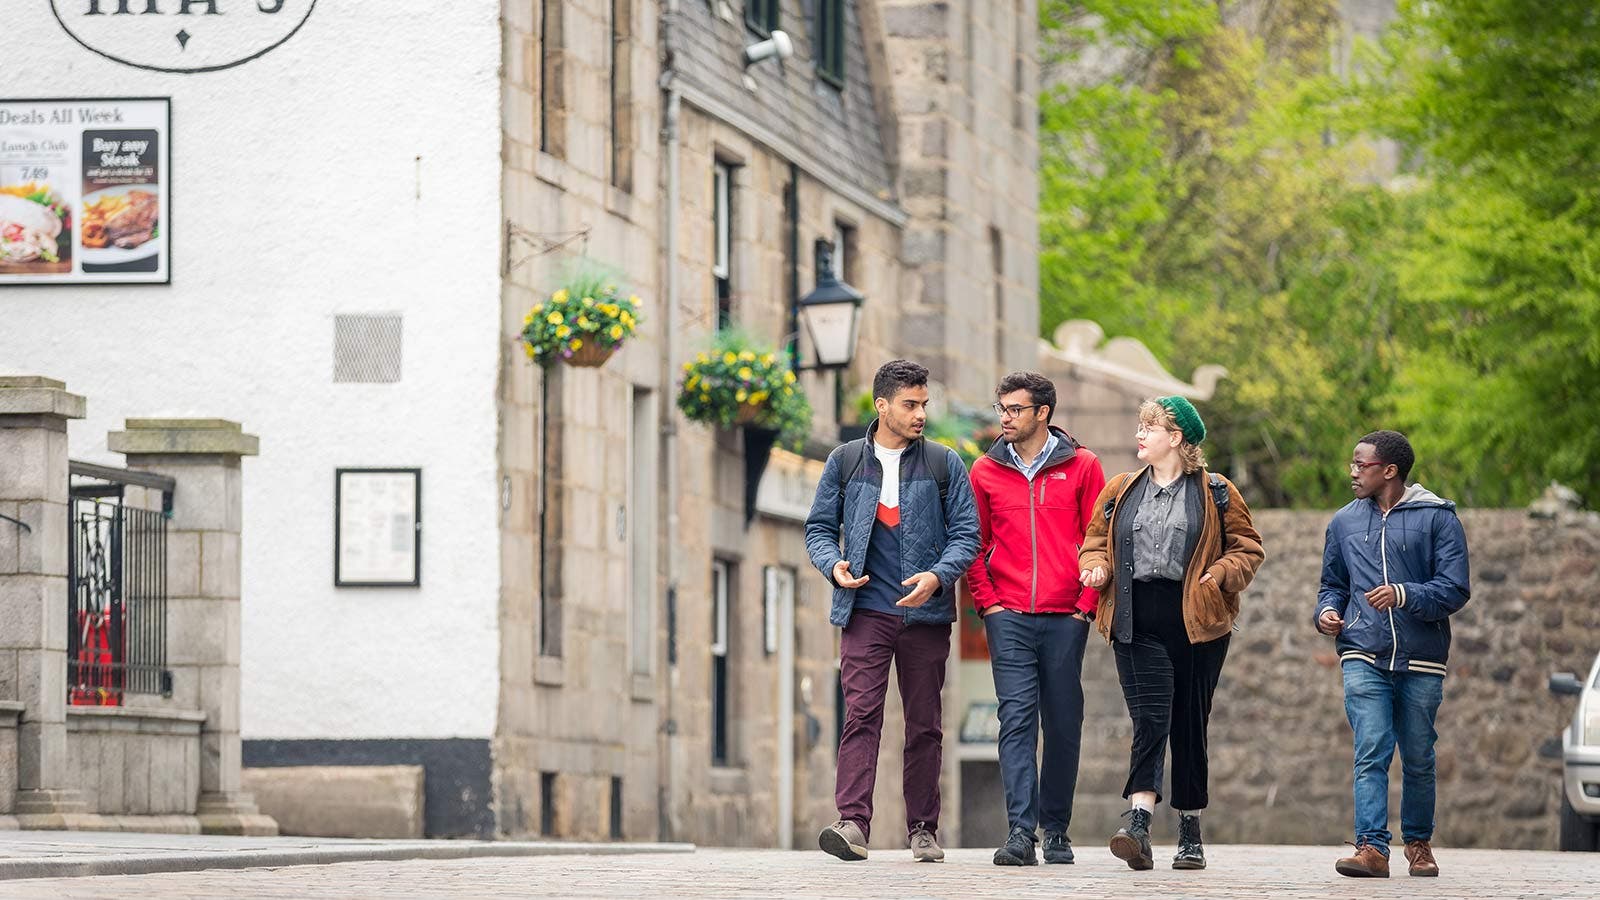 Aberdeen University students walking through the city